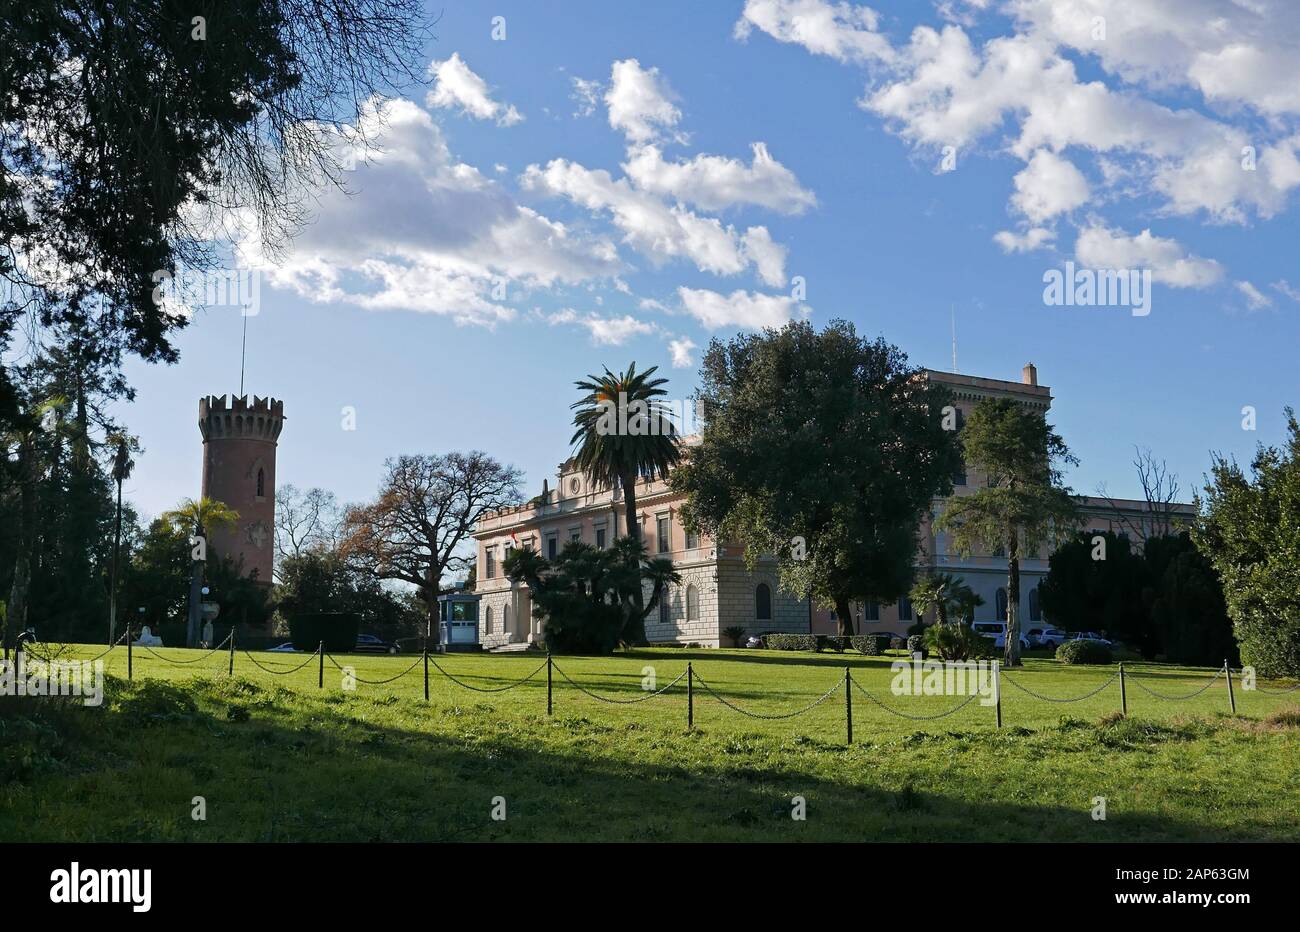 ROME, ITALY - DECEMBER 28, 2019: Exterior of the Egyptian Embassy aka Villa Savoia in the Villa Ada public park Stock Photo